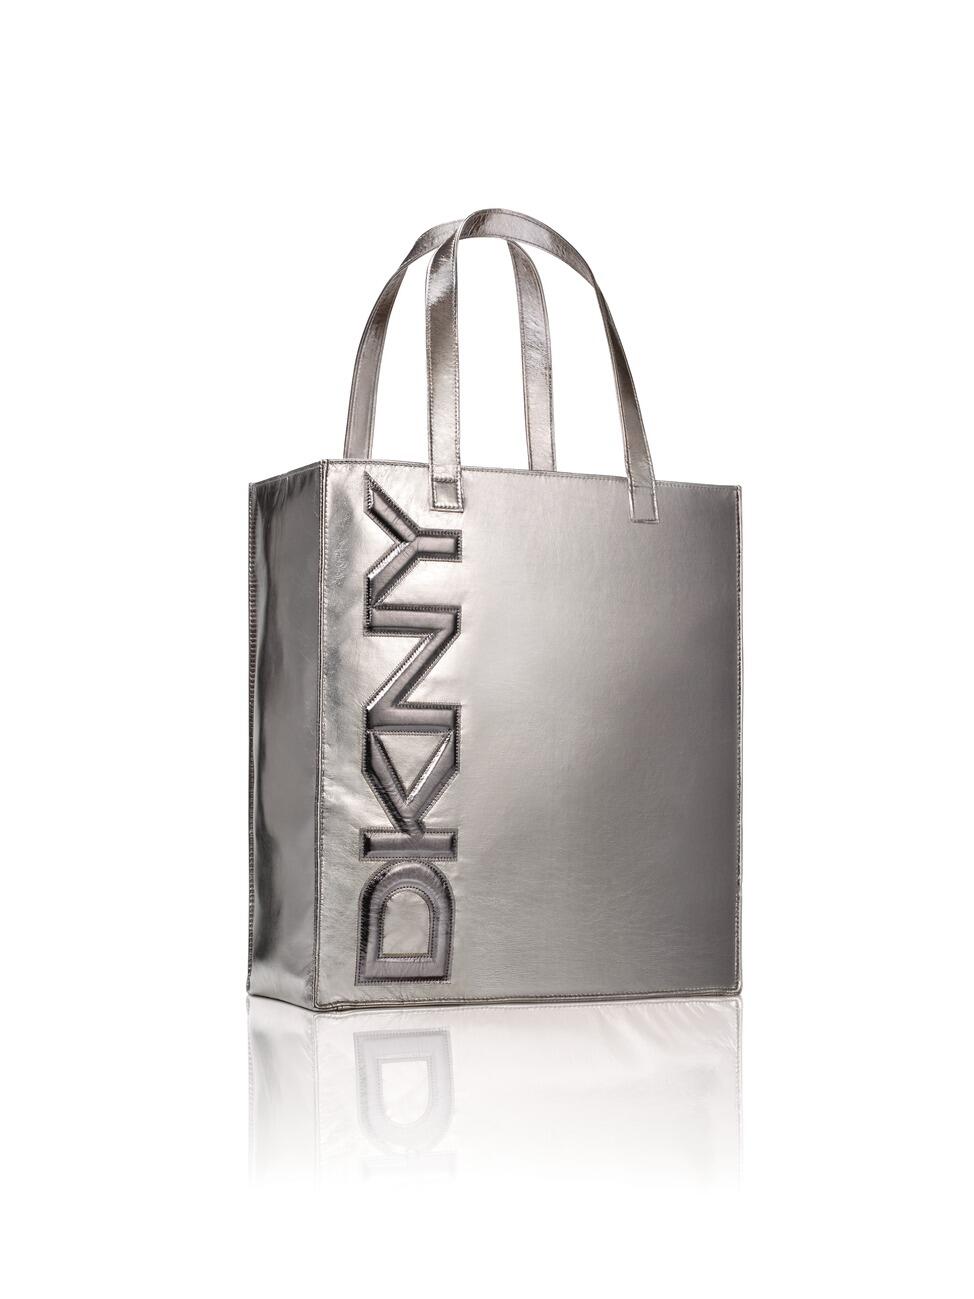 DKNY Stories gift set 30ml eau de parfum and a... - Depop